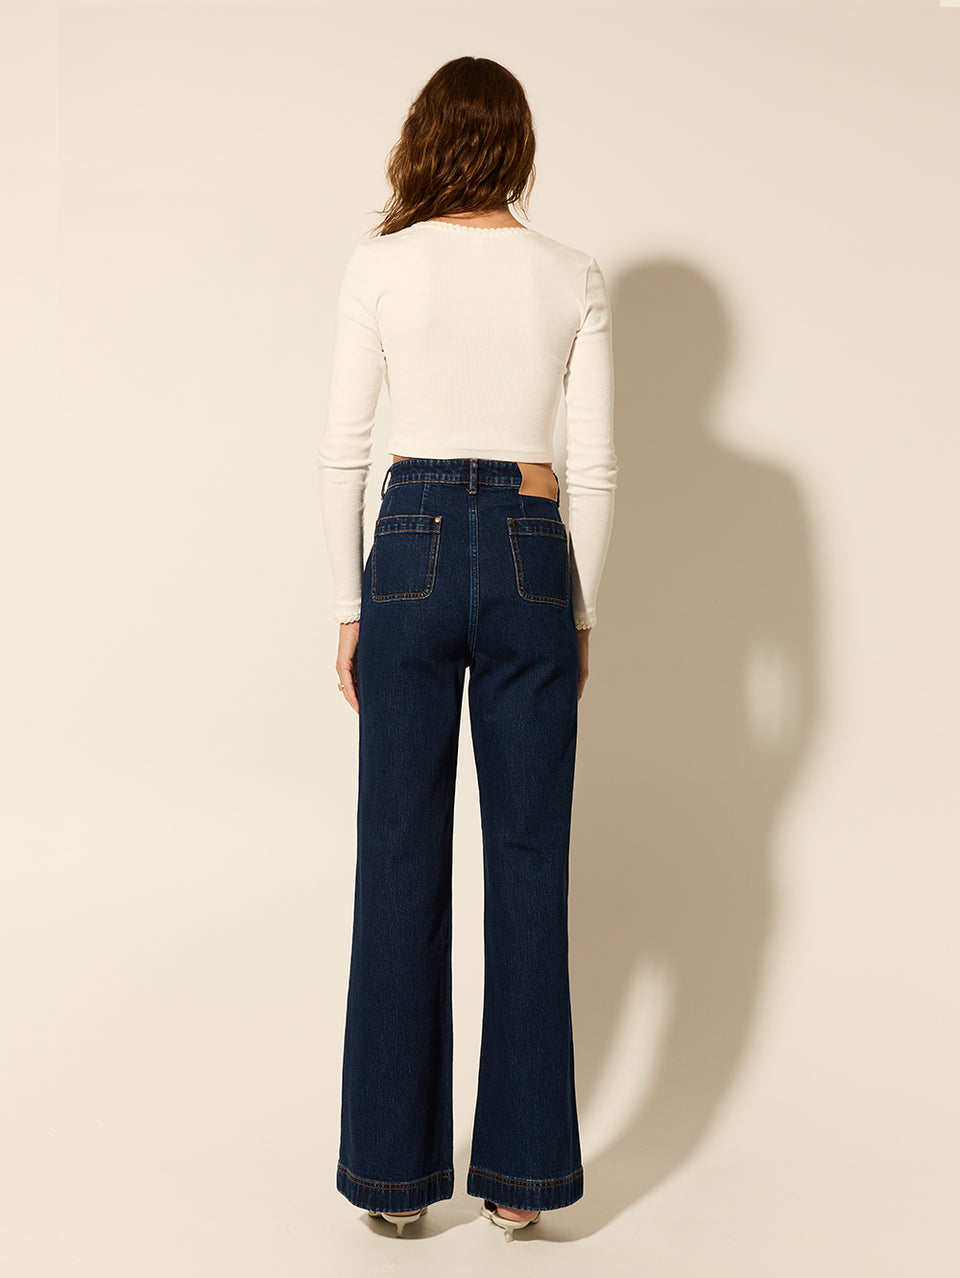 Dominique Jean KIVARI | Model wears denim jean back view